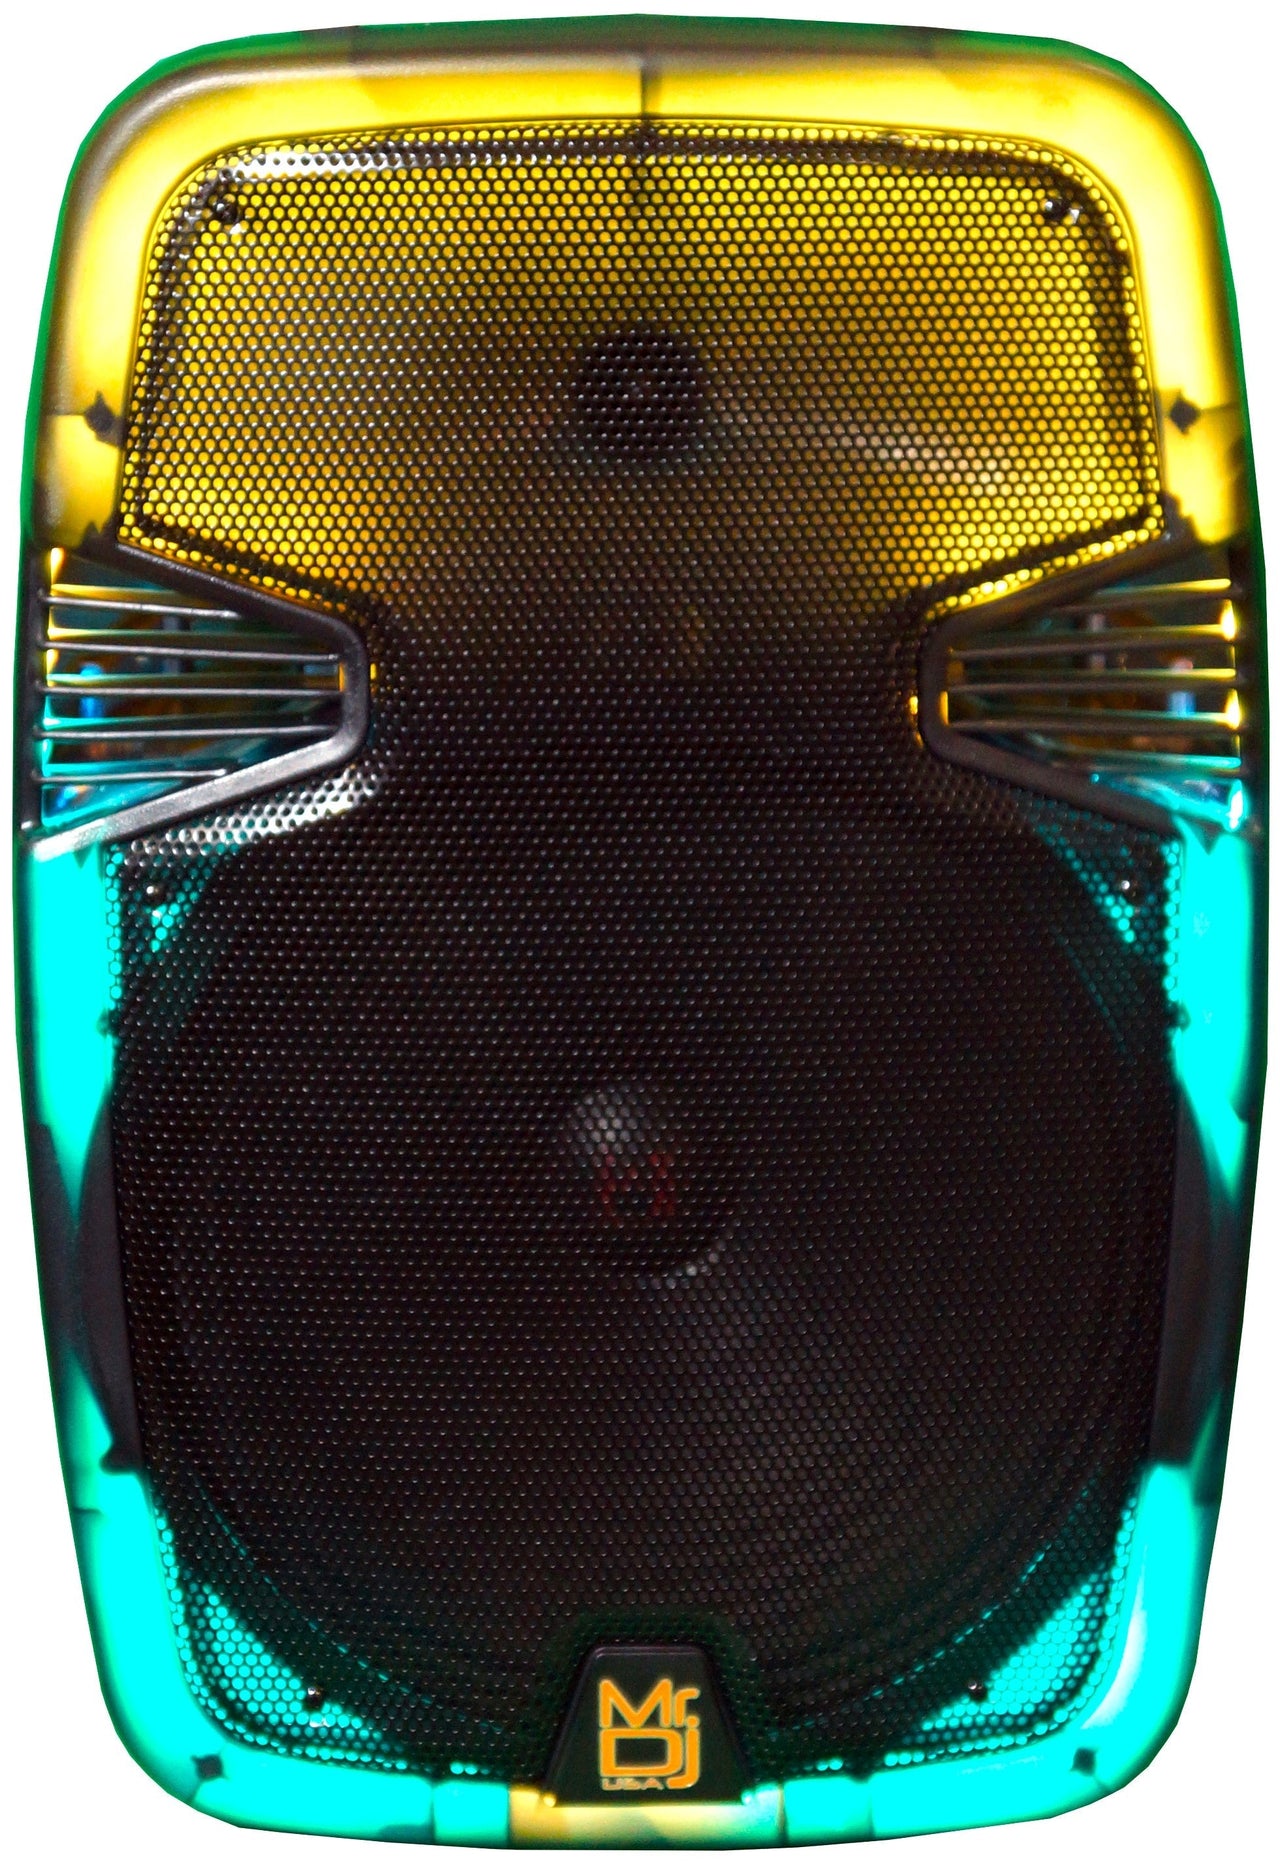 MR DJ PL15FLAME 15" Portable Translucent Bluetooth Speaker + Speaker Stand + LED Crystal Magic Ball